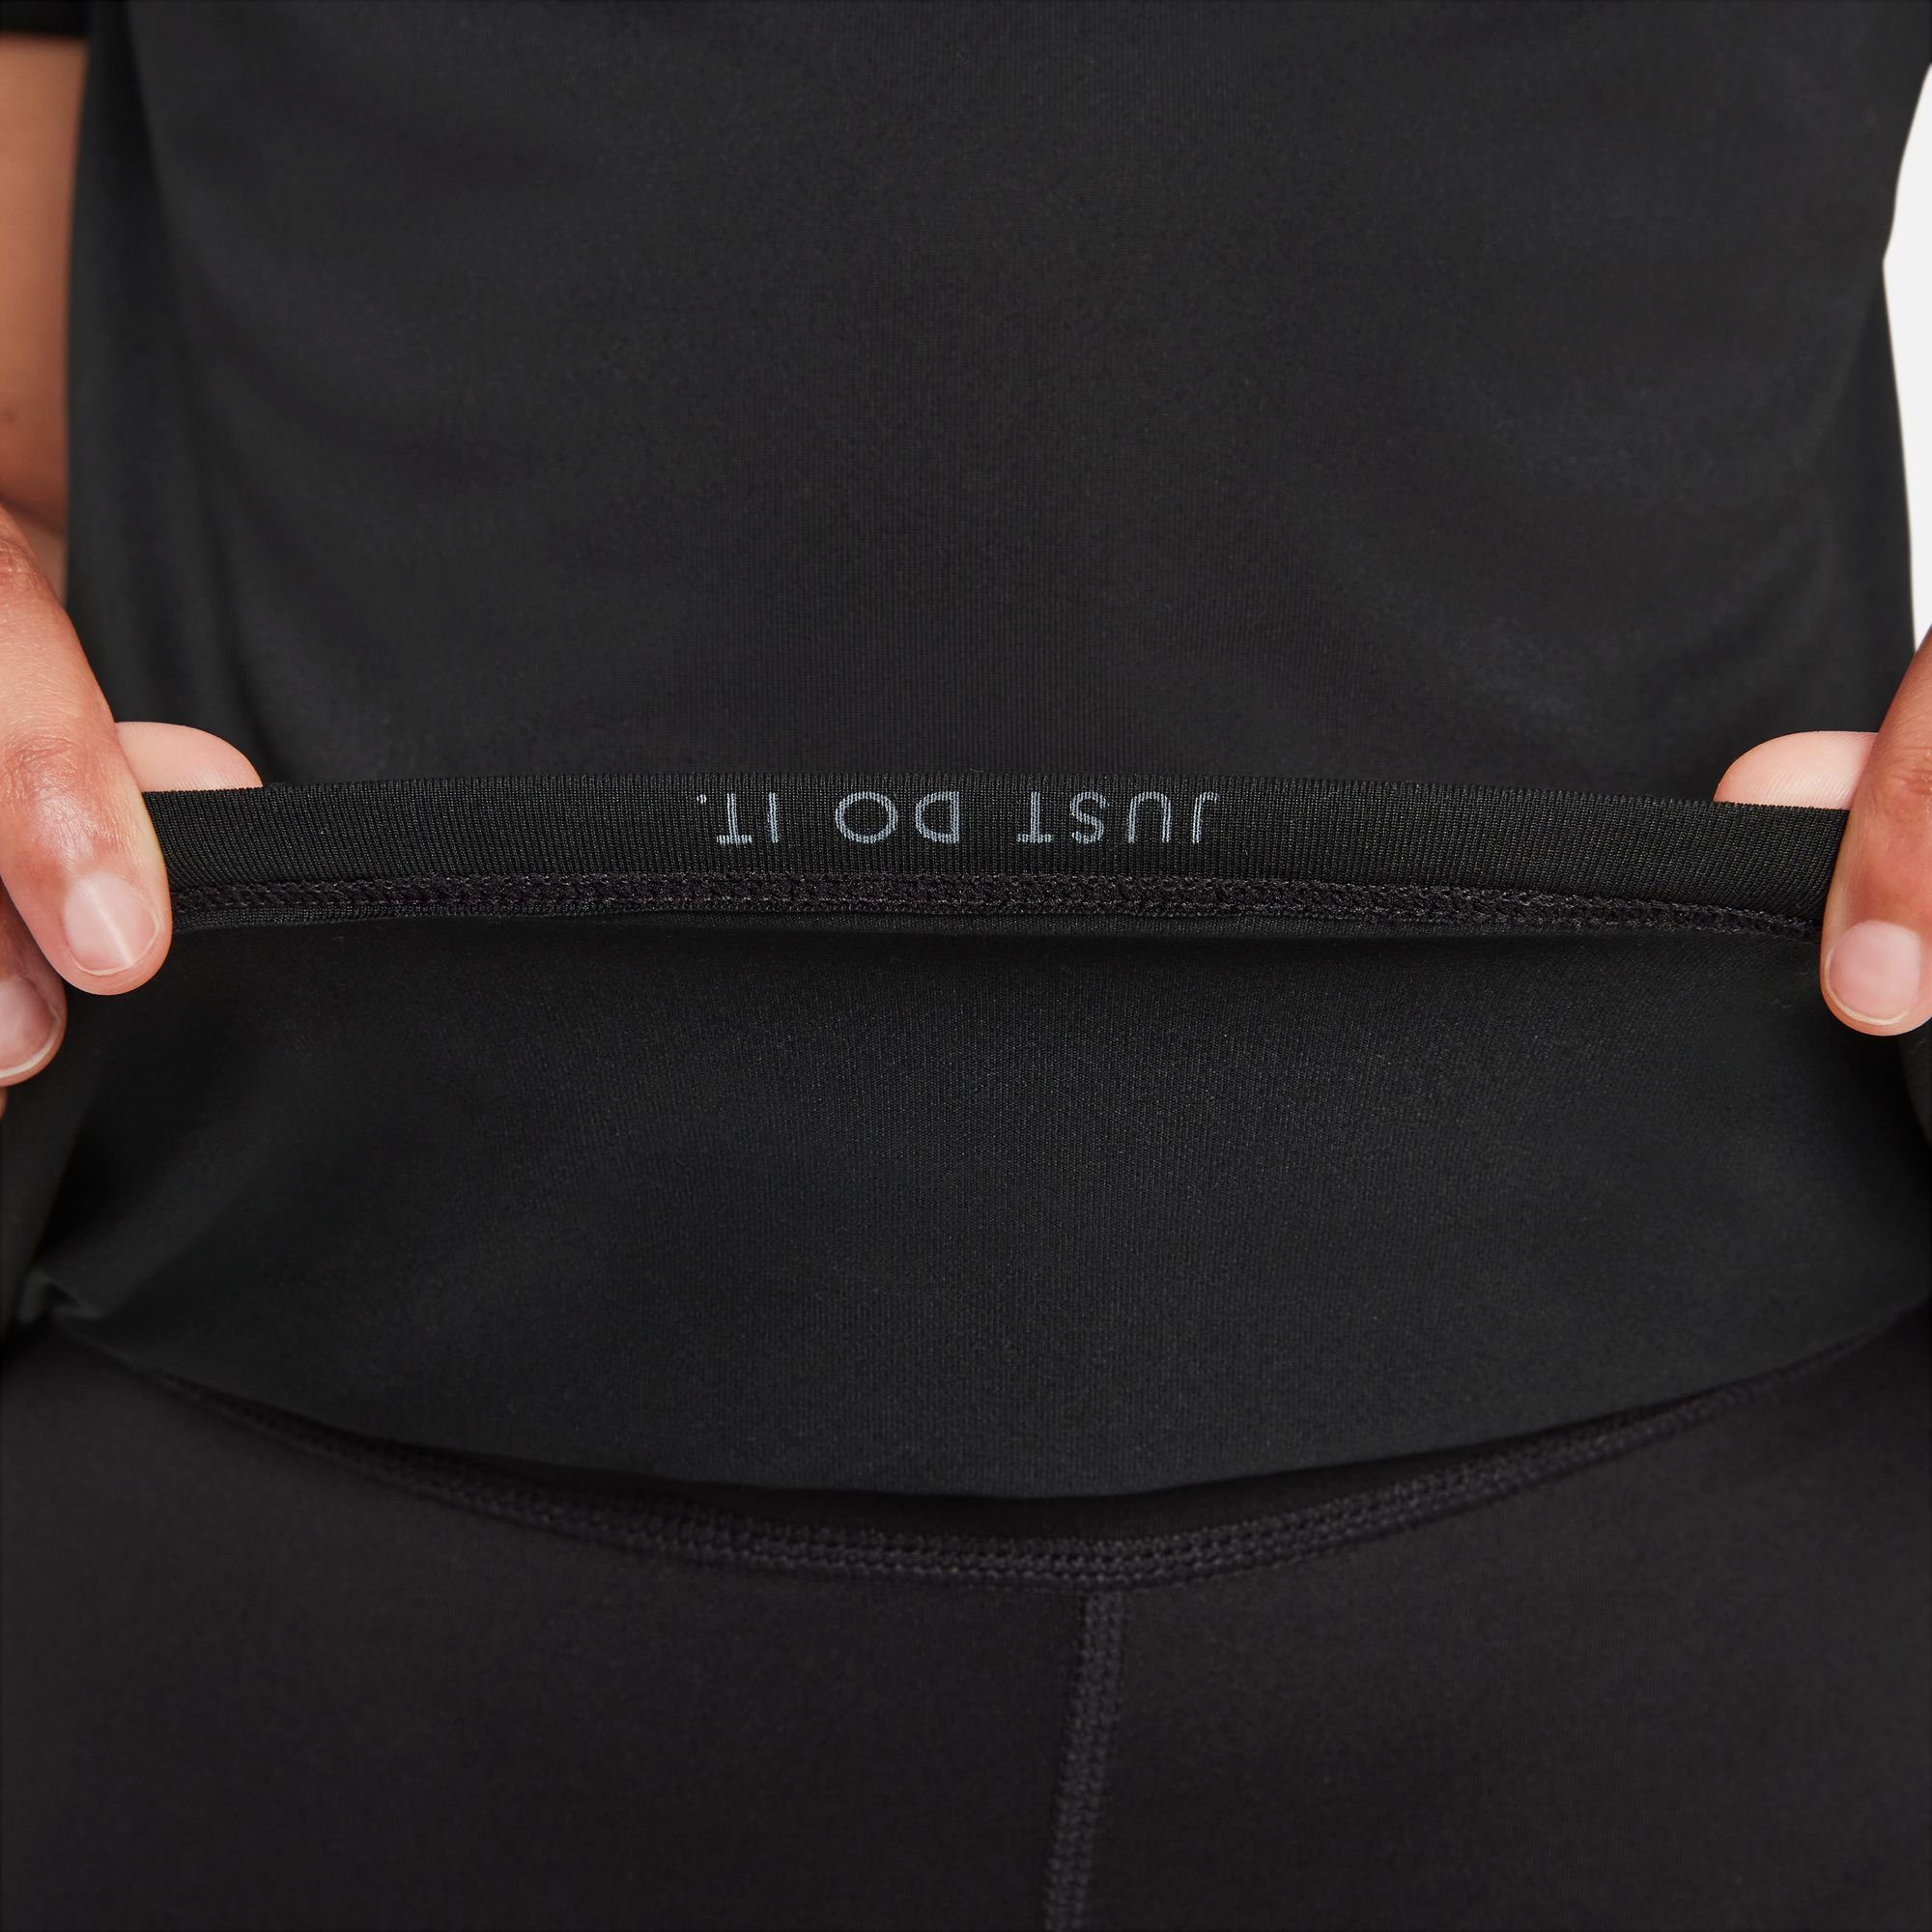 Nike Trainingsshirt DRI-FIT (GIRLS) schwarz ONE BIG TOP KIDS' SHORT-SLEEVE TRAINING